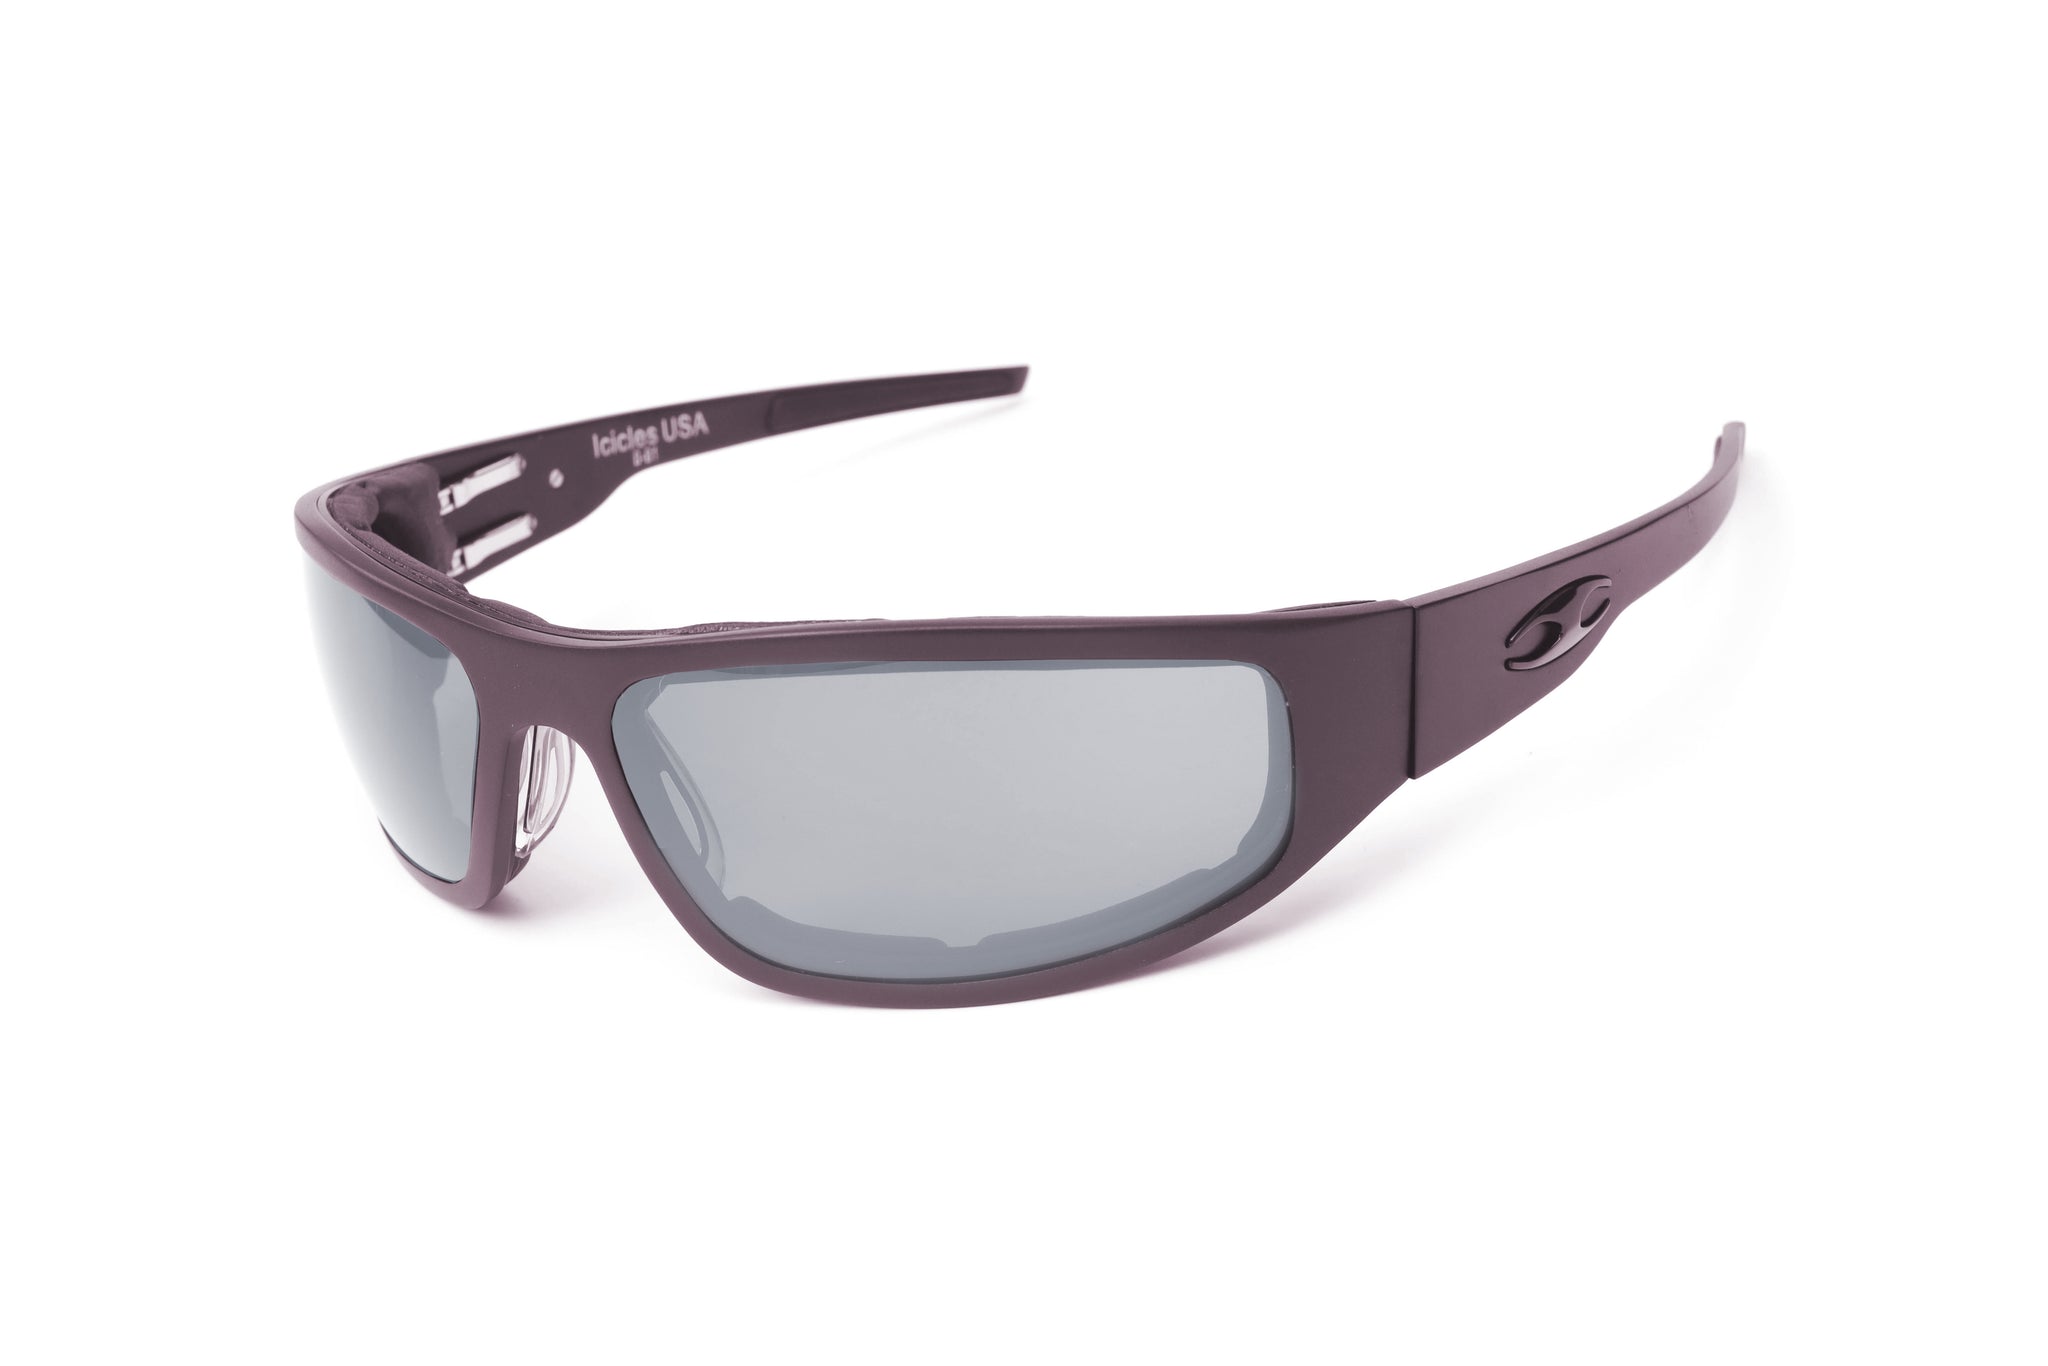 Icicles Eyewear “Bagger” Gunmetal Motorcycle Sunglasses (Smooth) No - Single / Transition - Grey / No